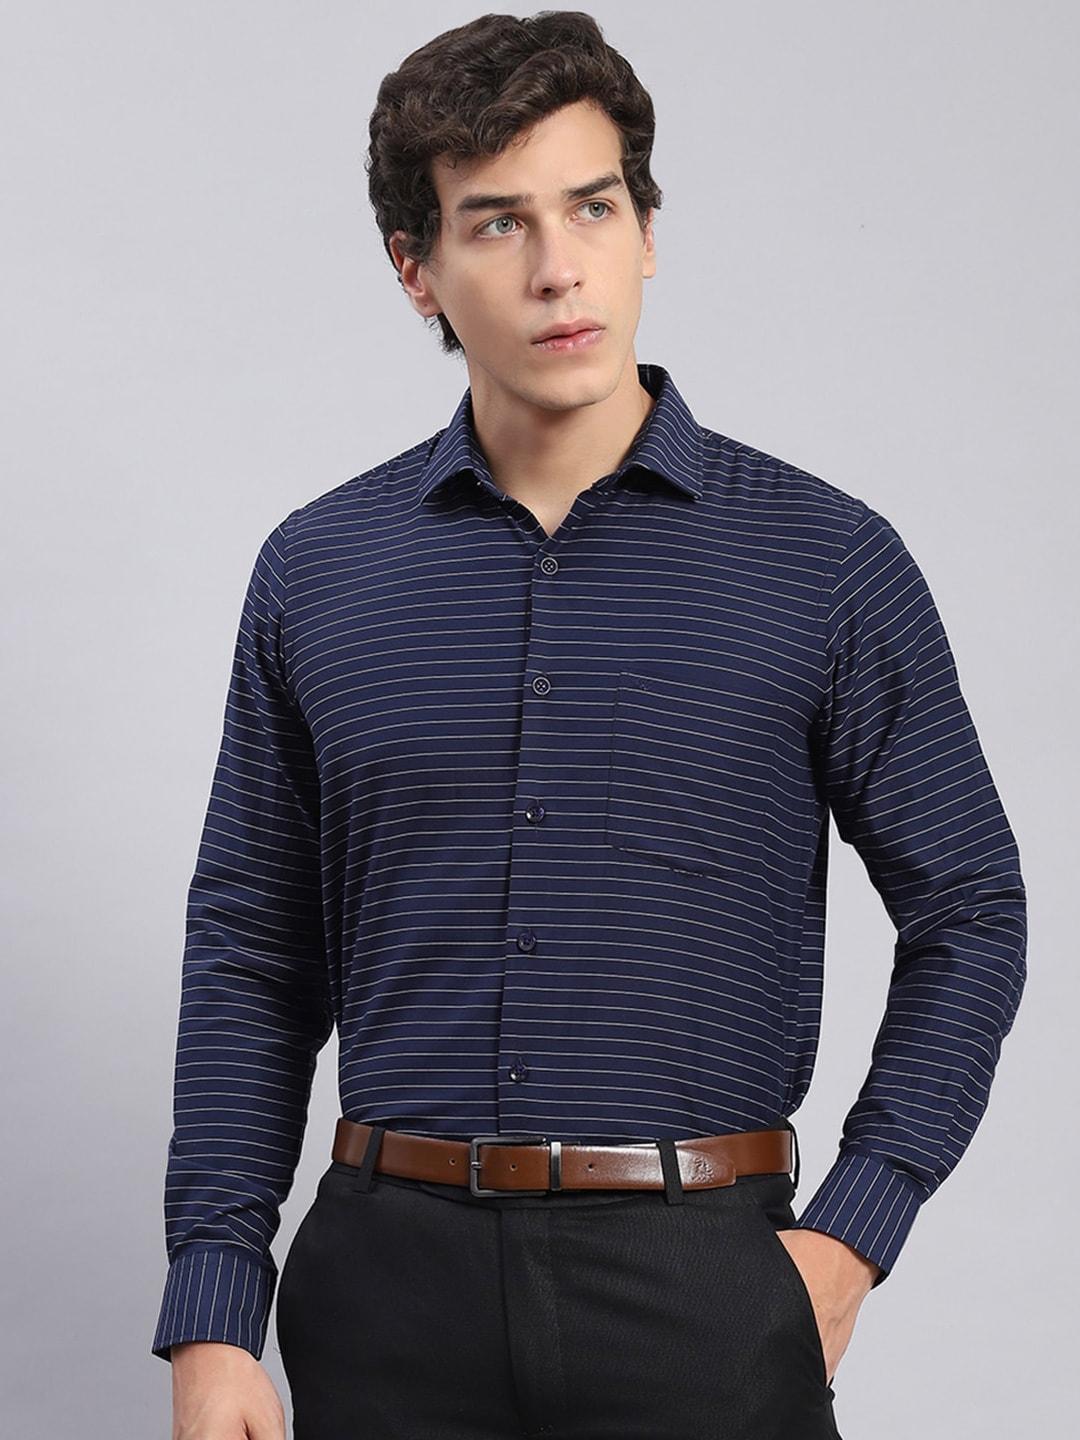 monte carlo classic slim fit horizontal stripes pure cotton formal shirt